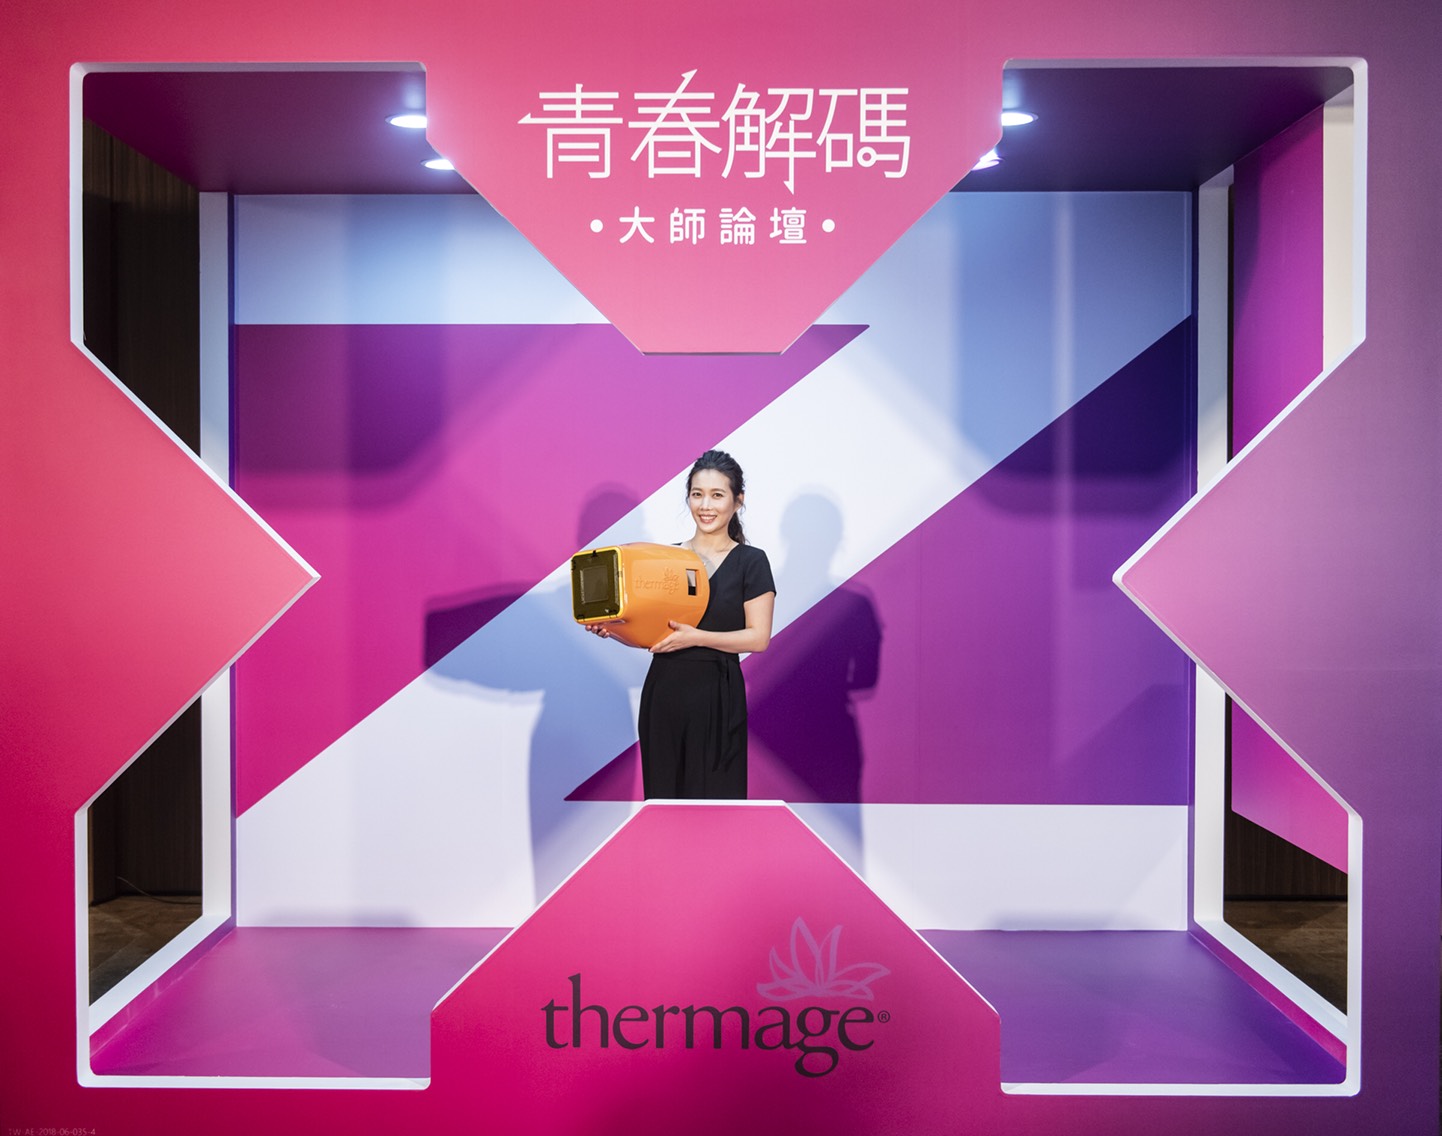 Thermage®電波拉皮在 W hotel舉辦了一場Thermage 大師論壇大會，會中于醫師擔任